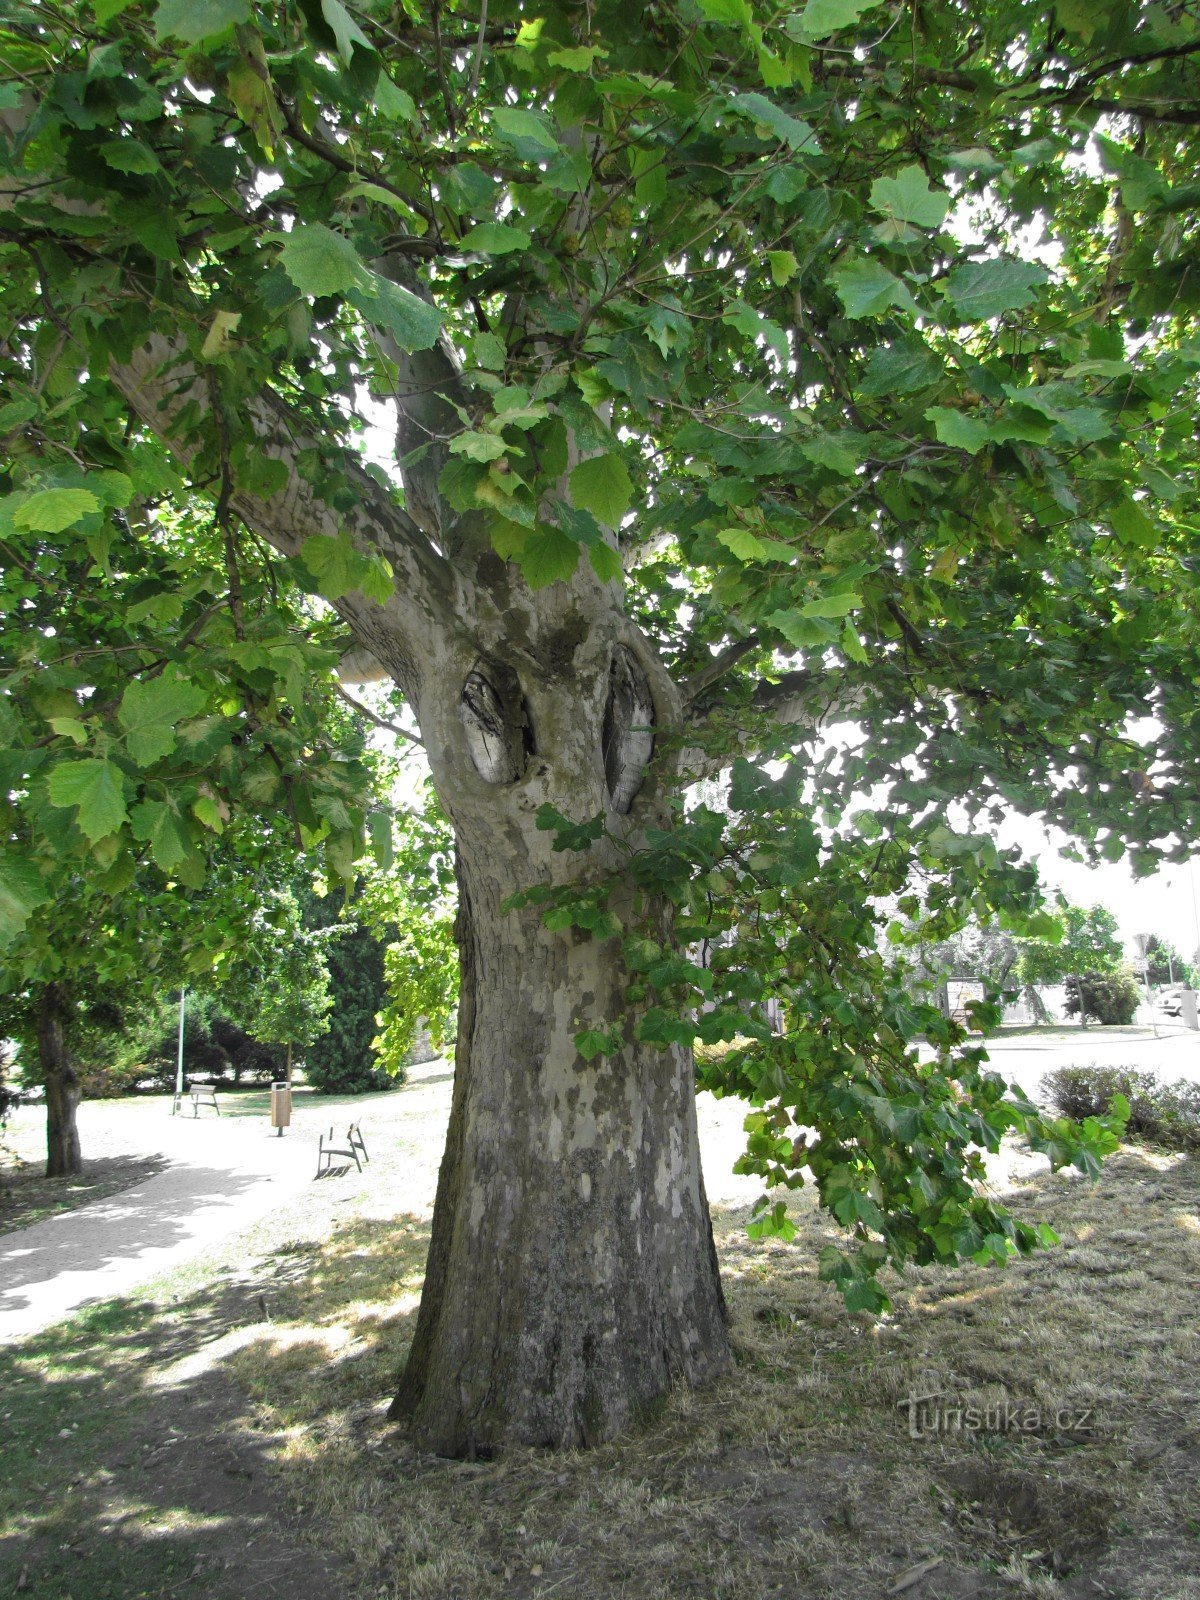 Plaanipuu lähellä asemaa Uherské Hradištěssa